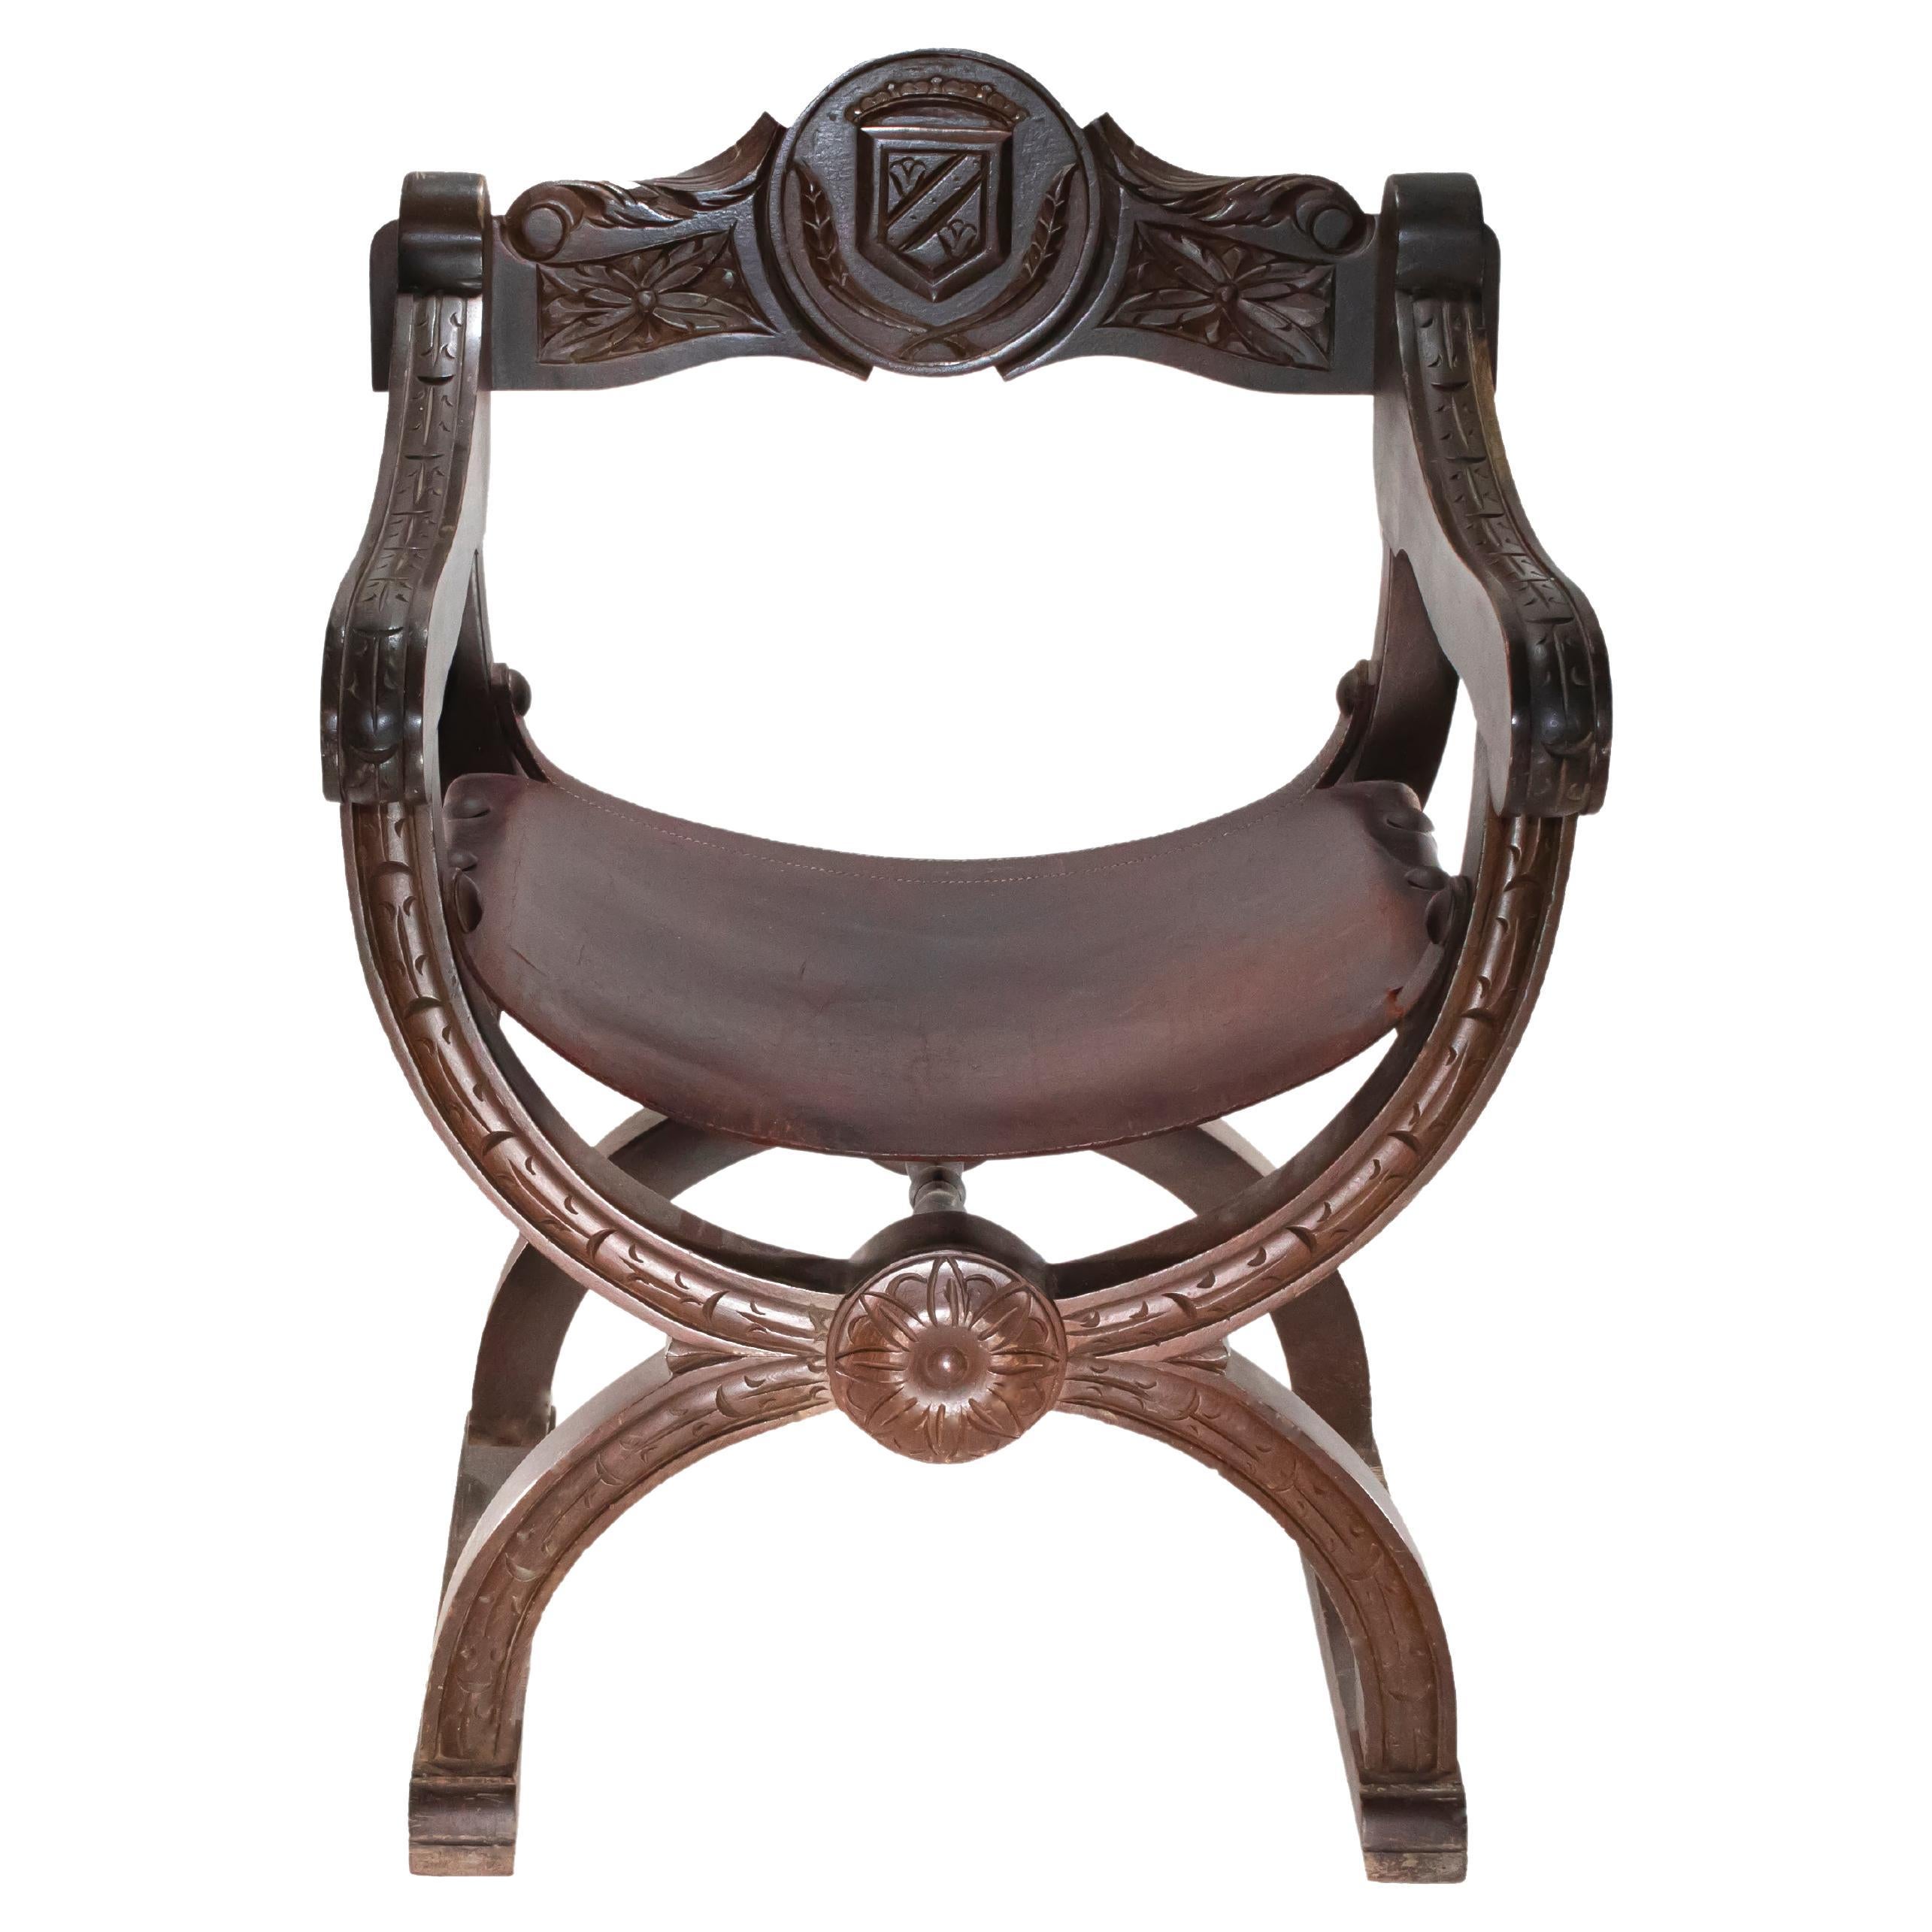 Curule Chair / Throne of Dagobert